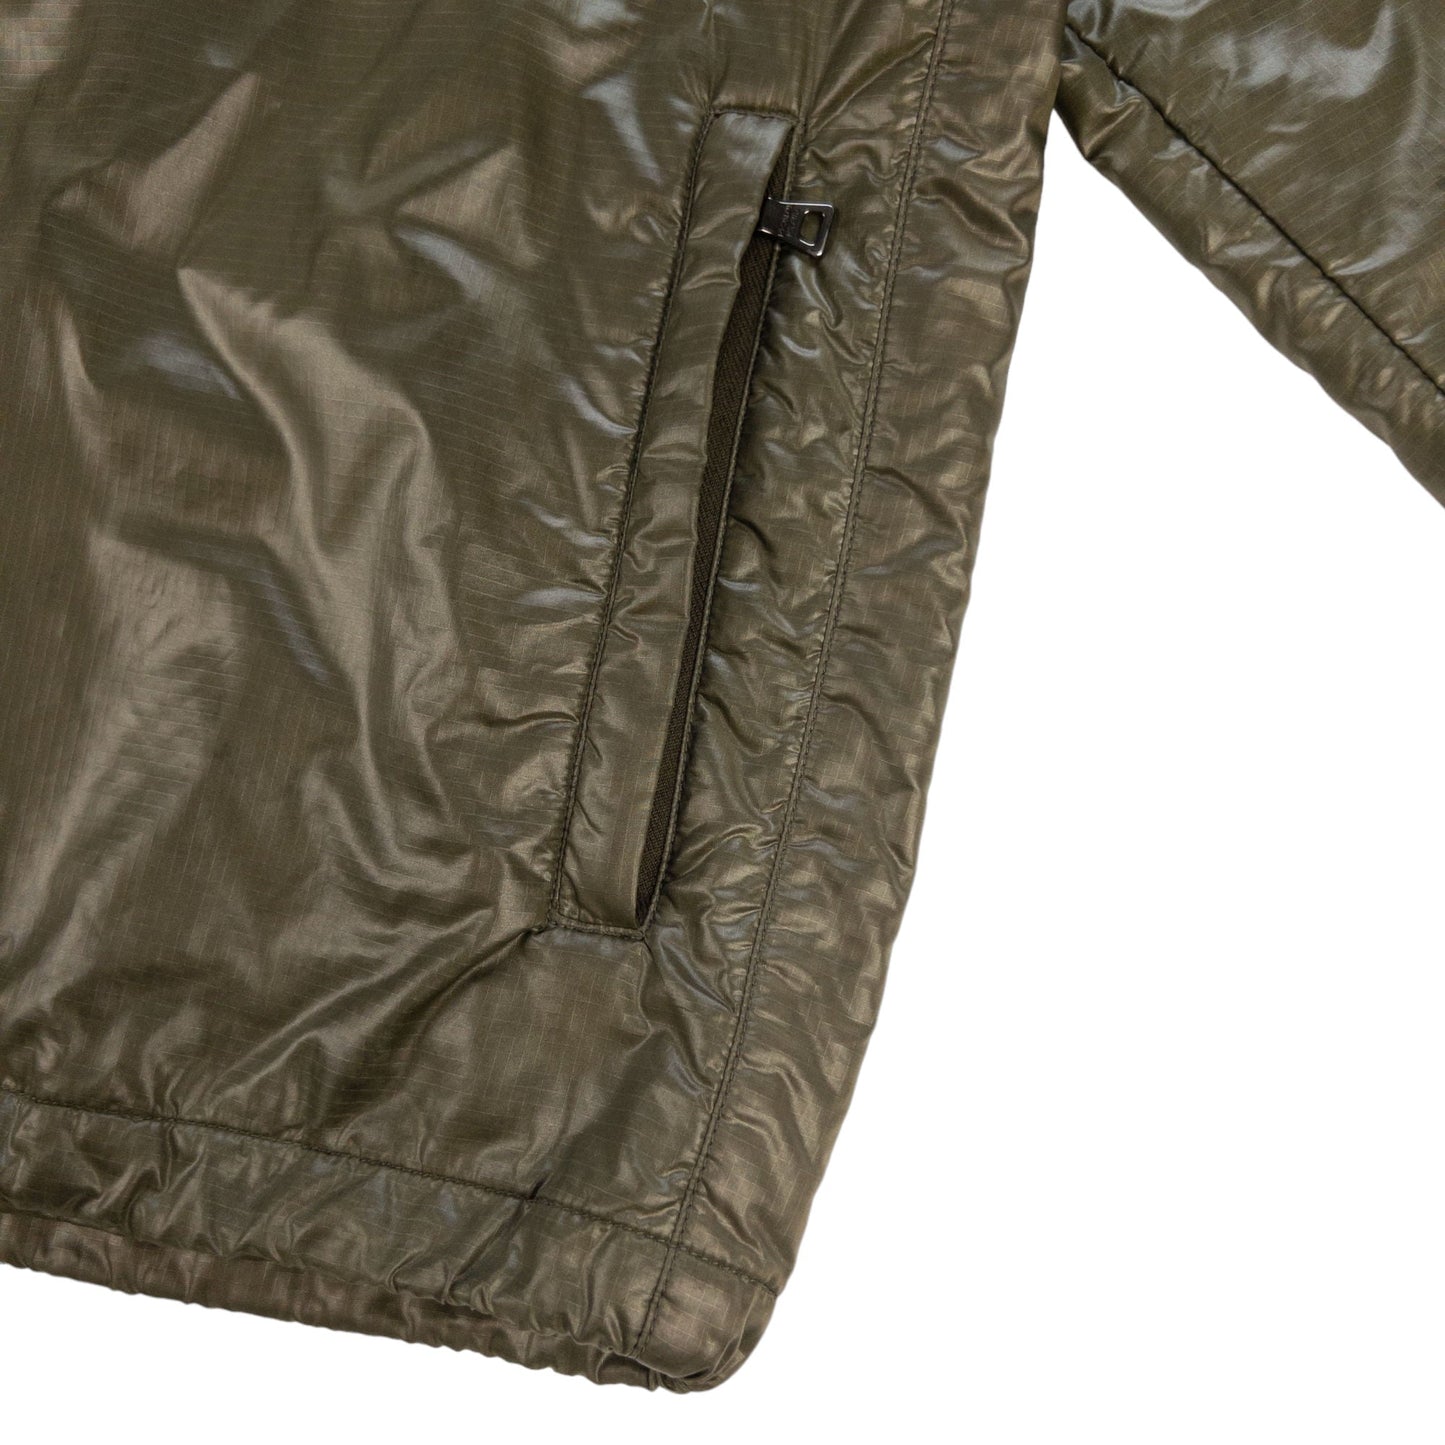 Vintage Prada Zip Up Padded Jacket Size L